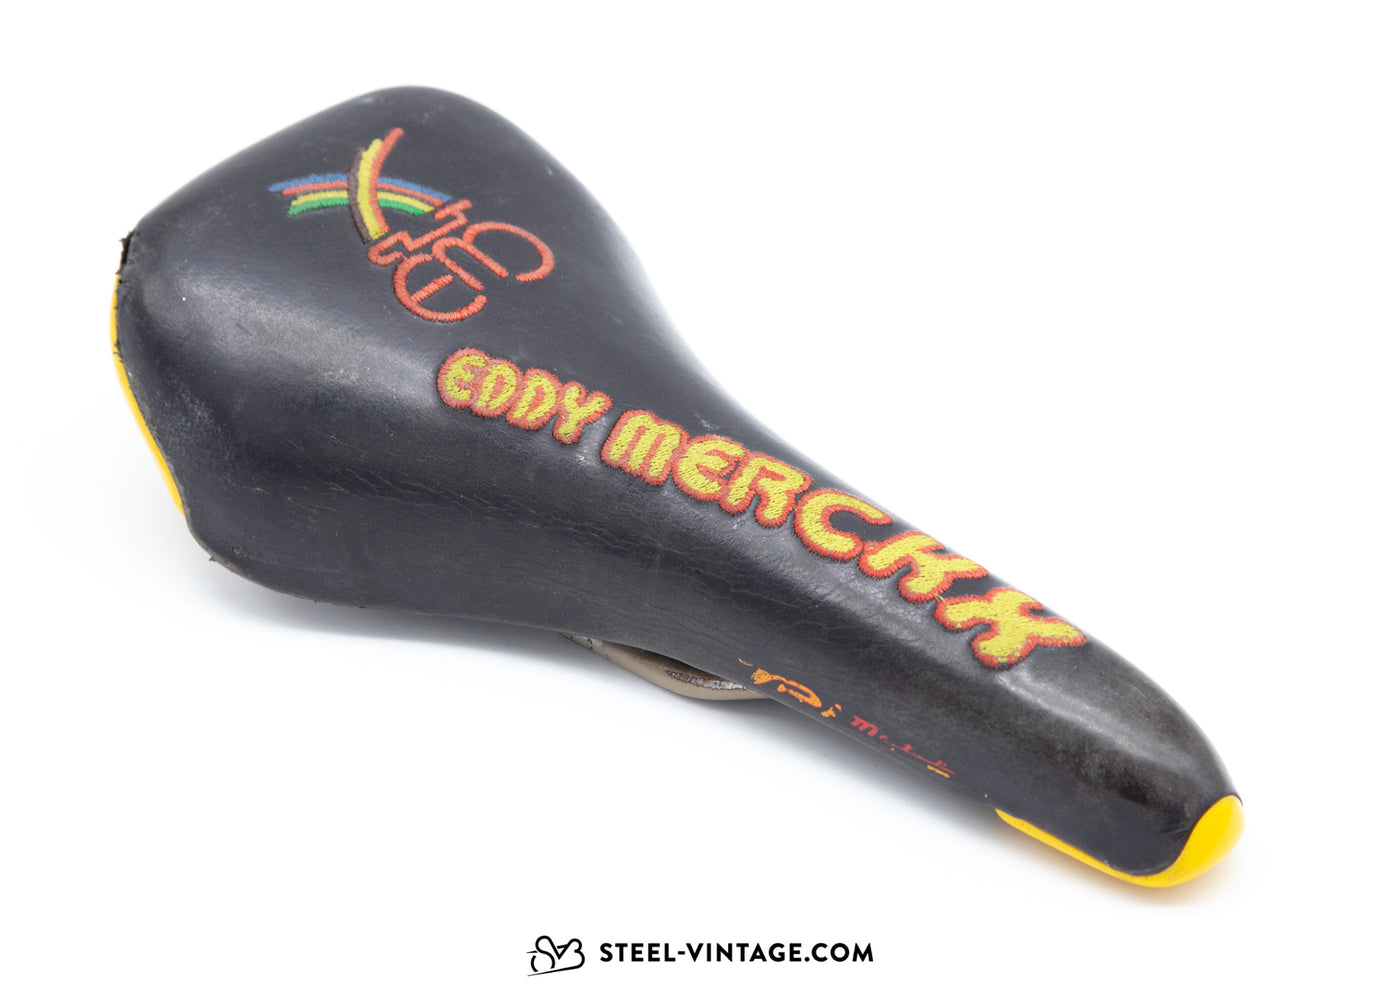 Selle Italia 1998 Eddy Merckx Tri-matic Saddle